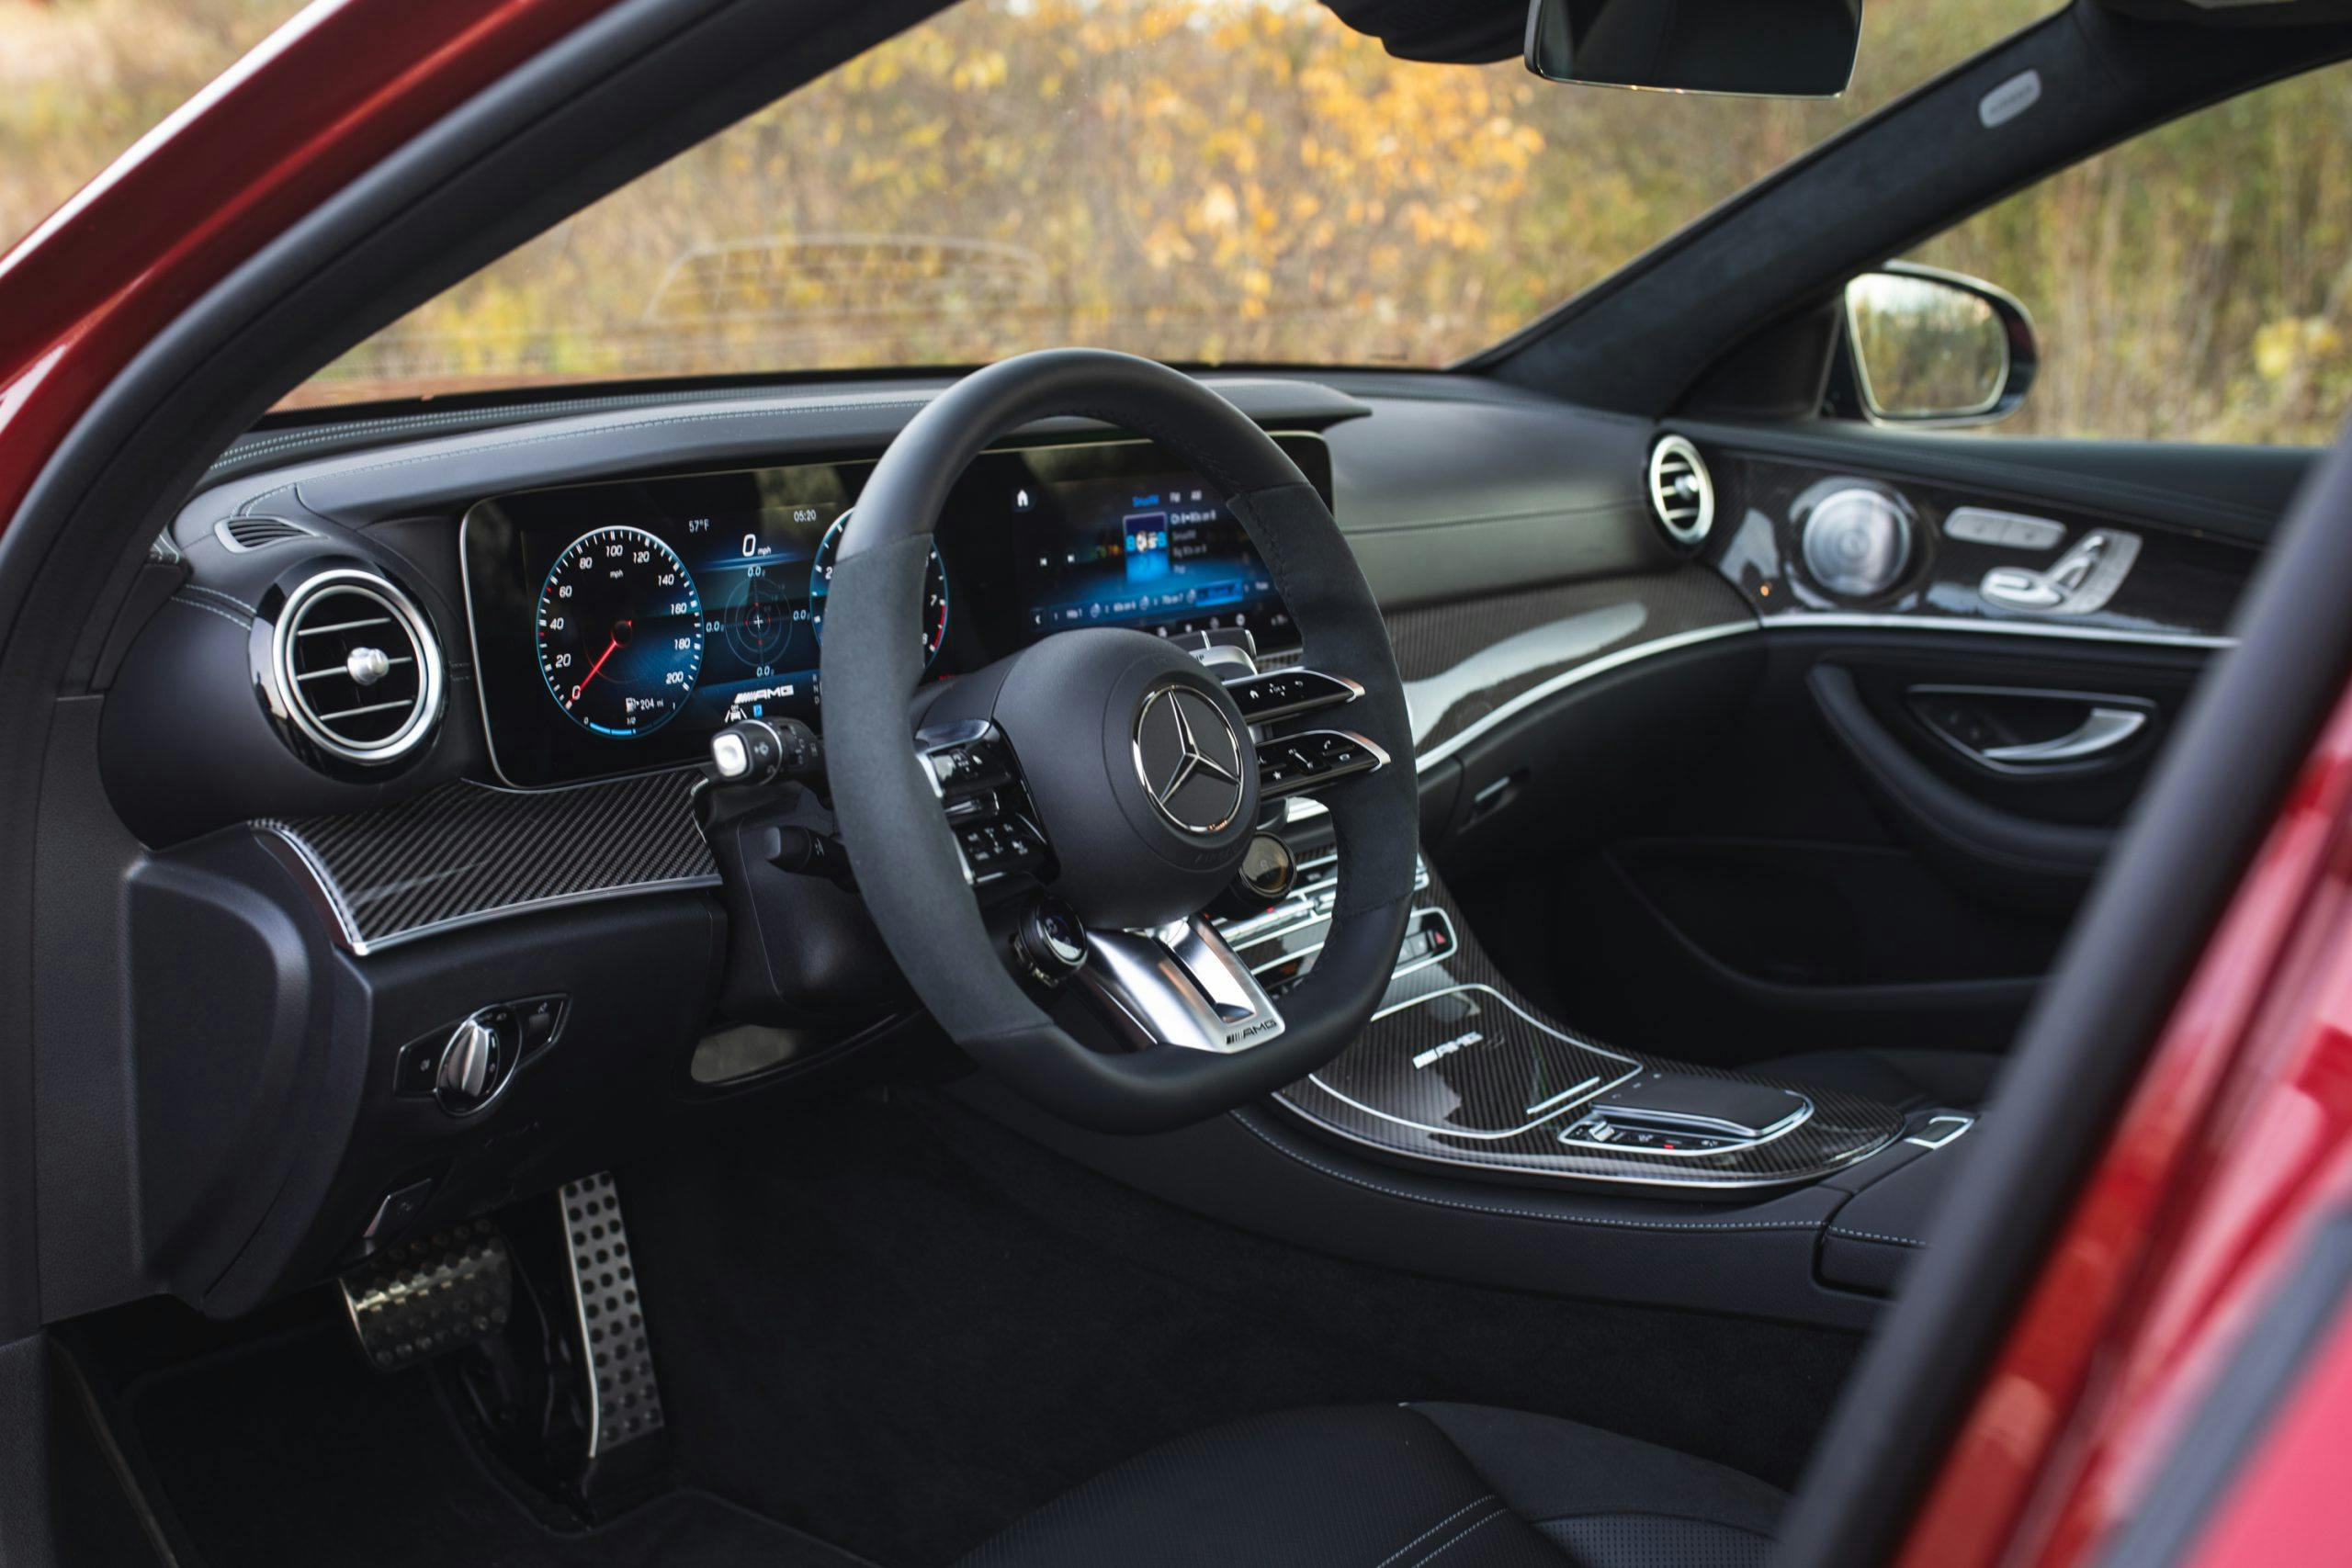 2021 Mercedes-AMG E63 S wagon interior front angle